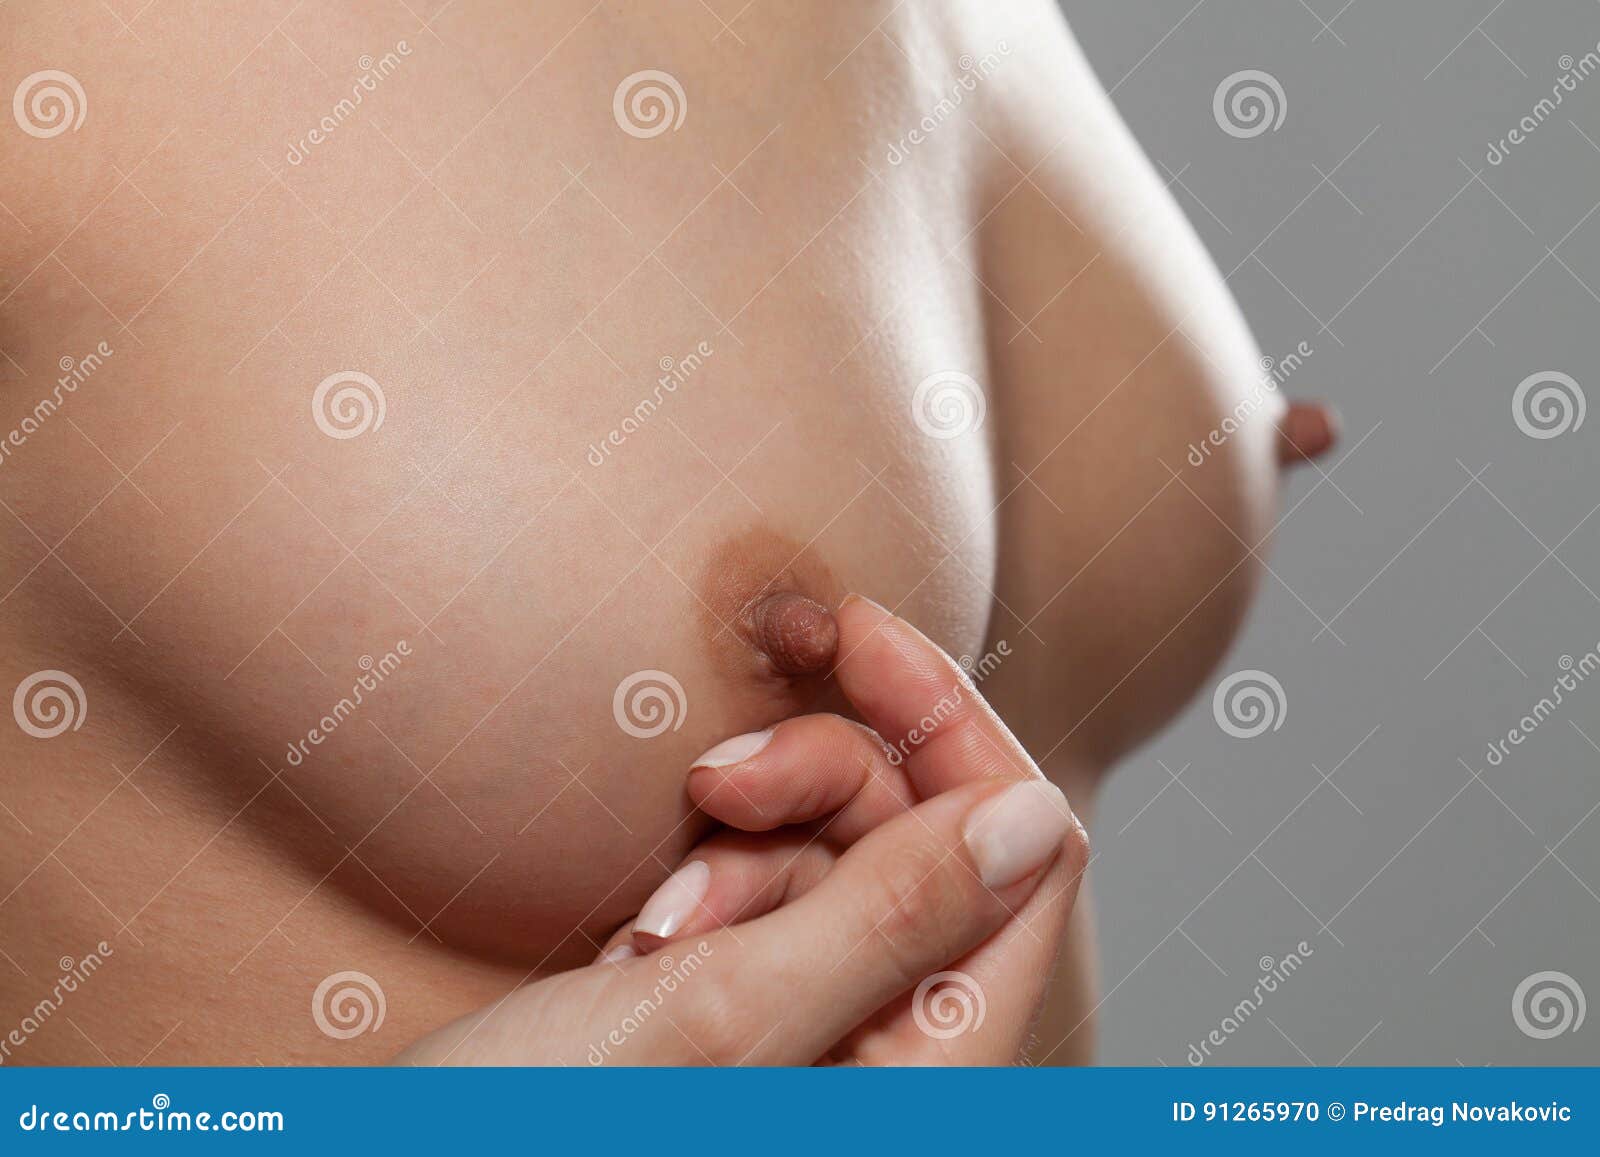 Large Nipple Photos pornstars photos